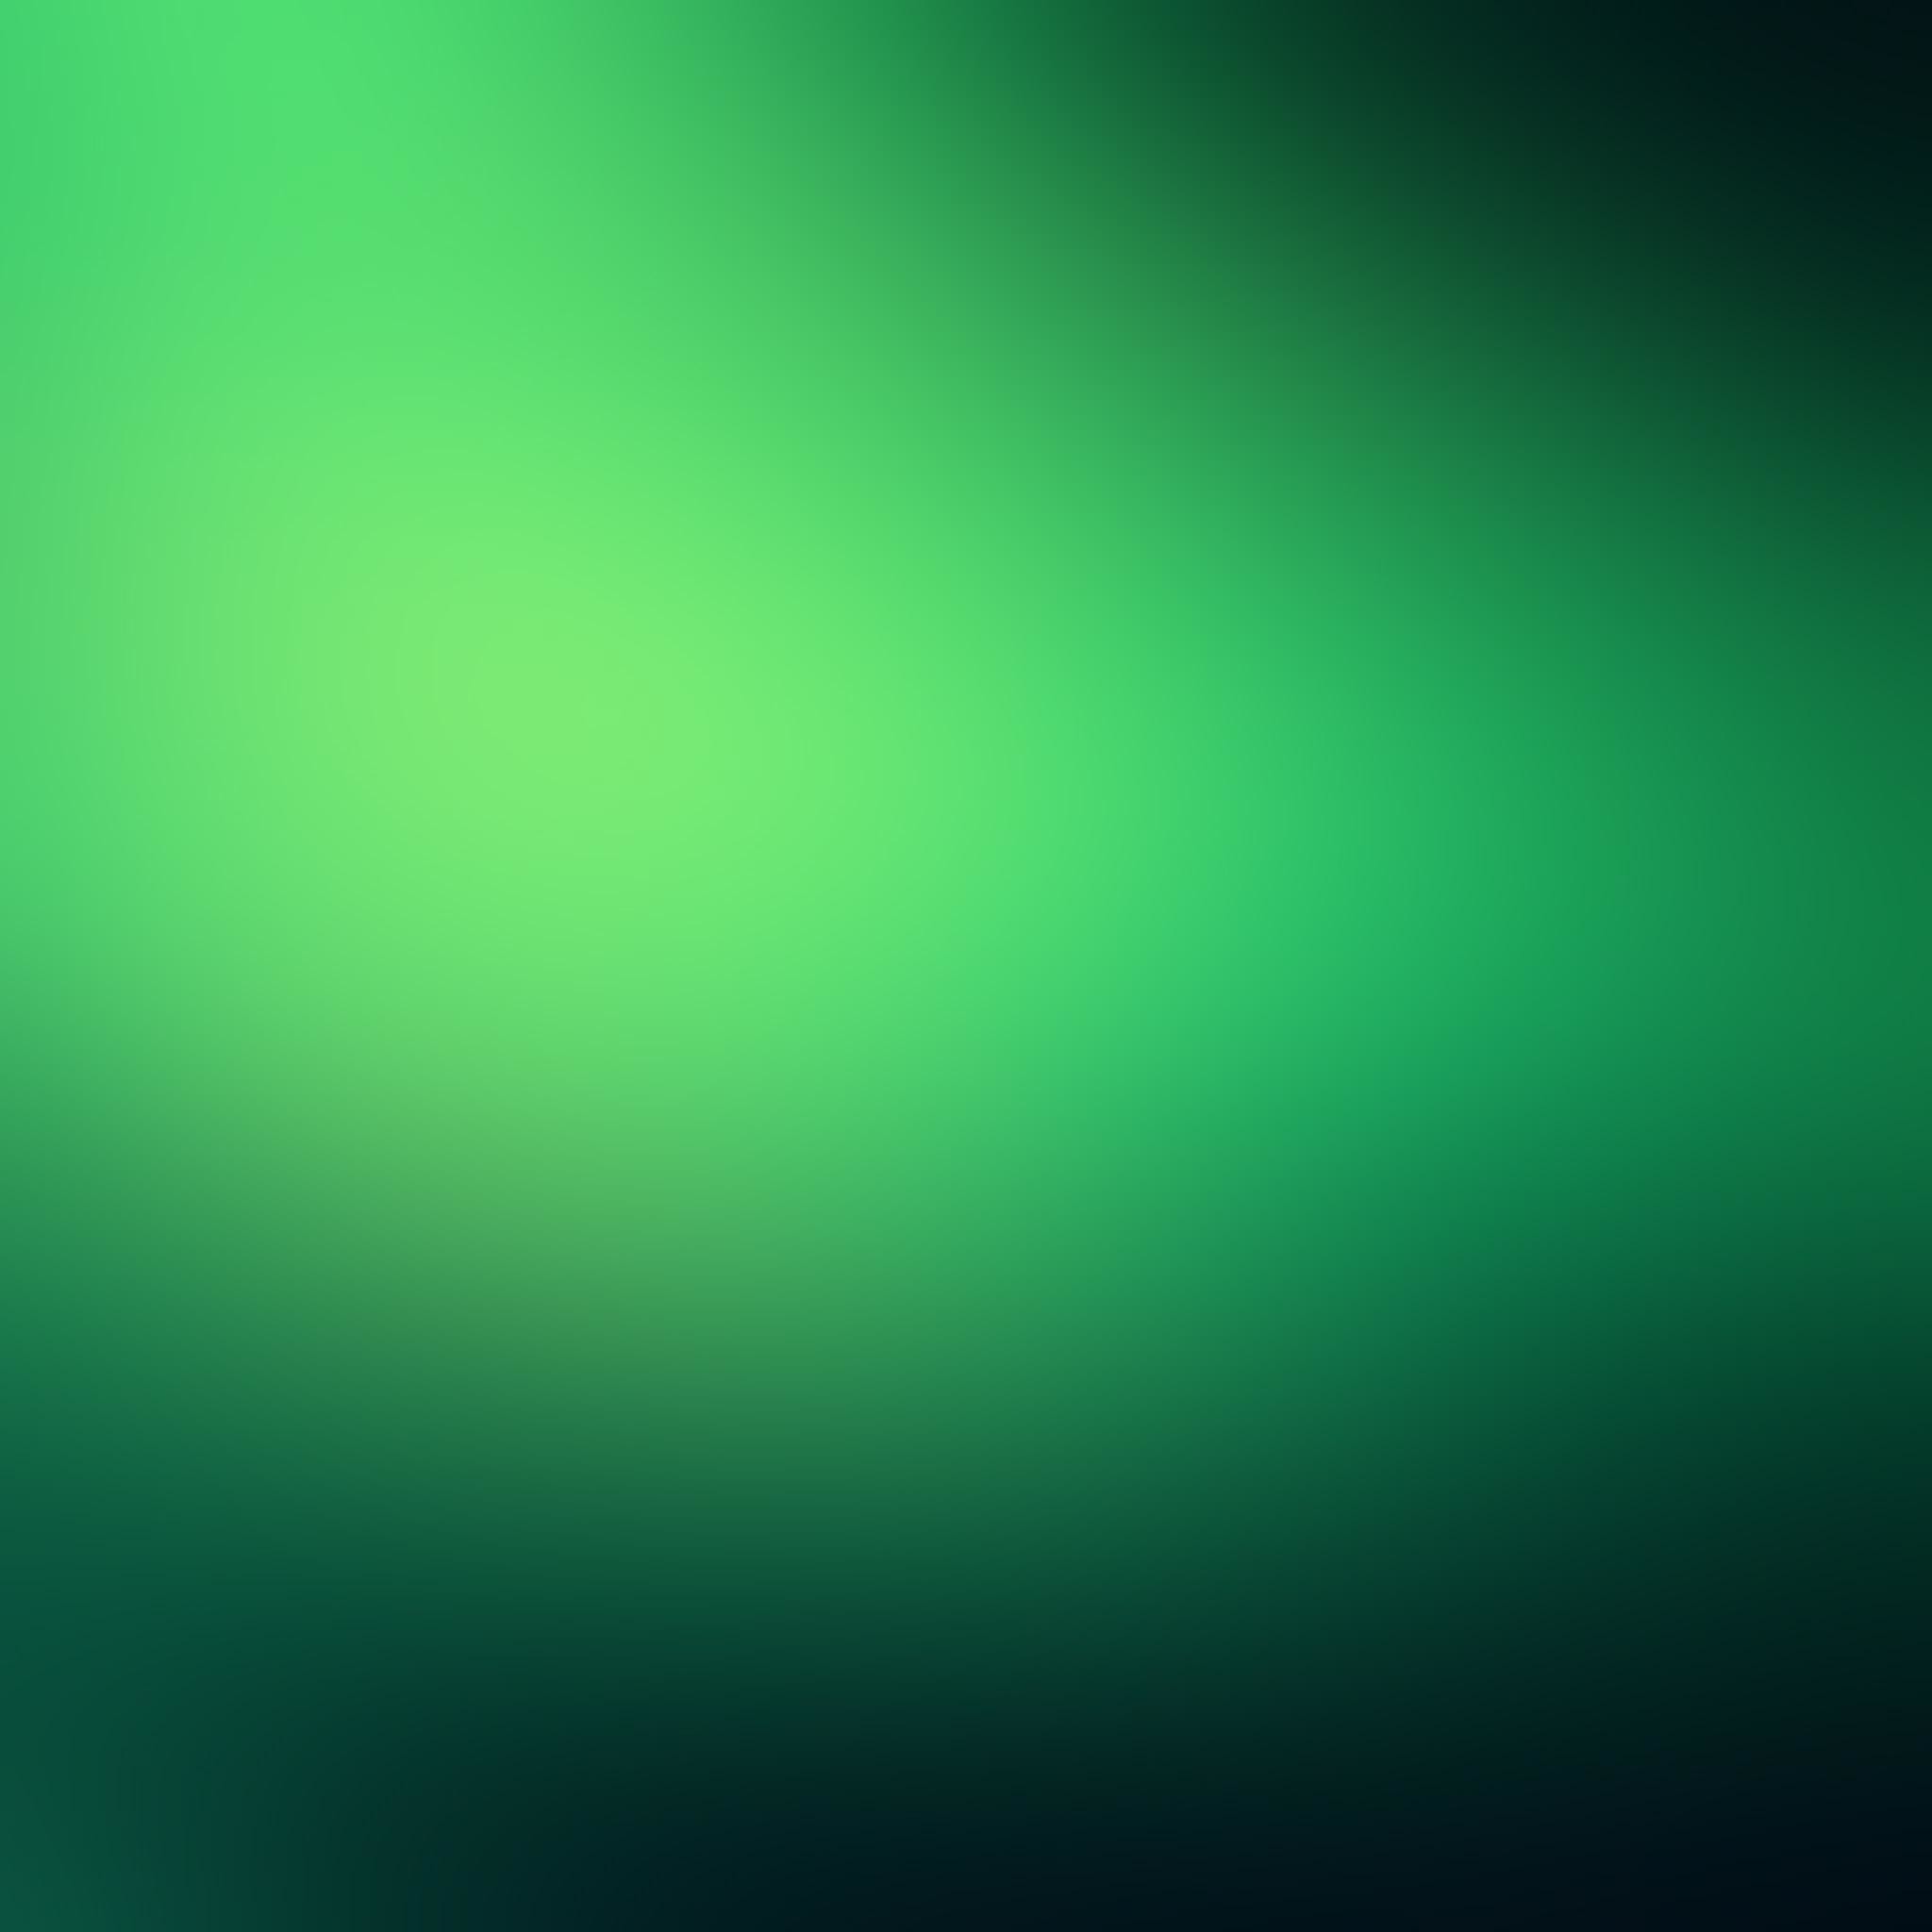 2048x2048 Retro Green Lantern Background